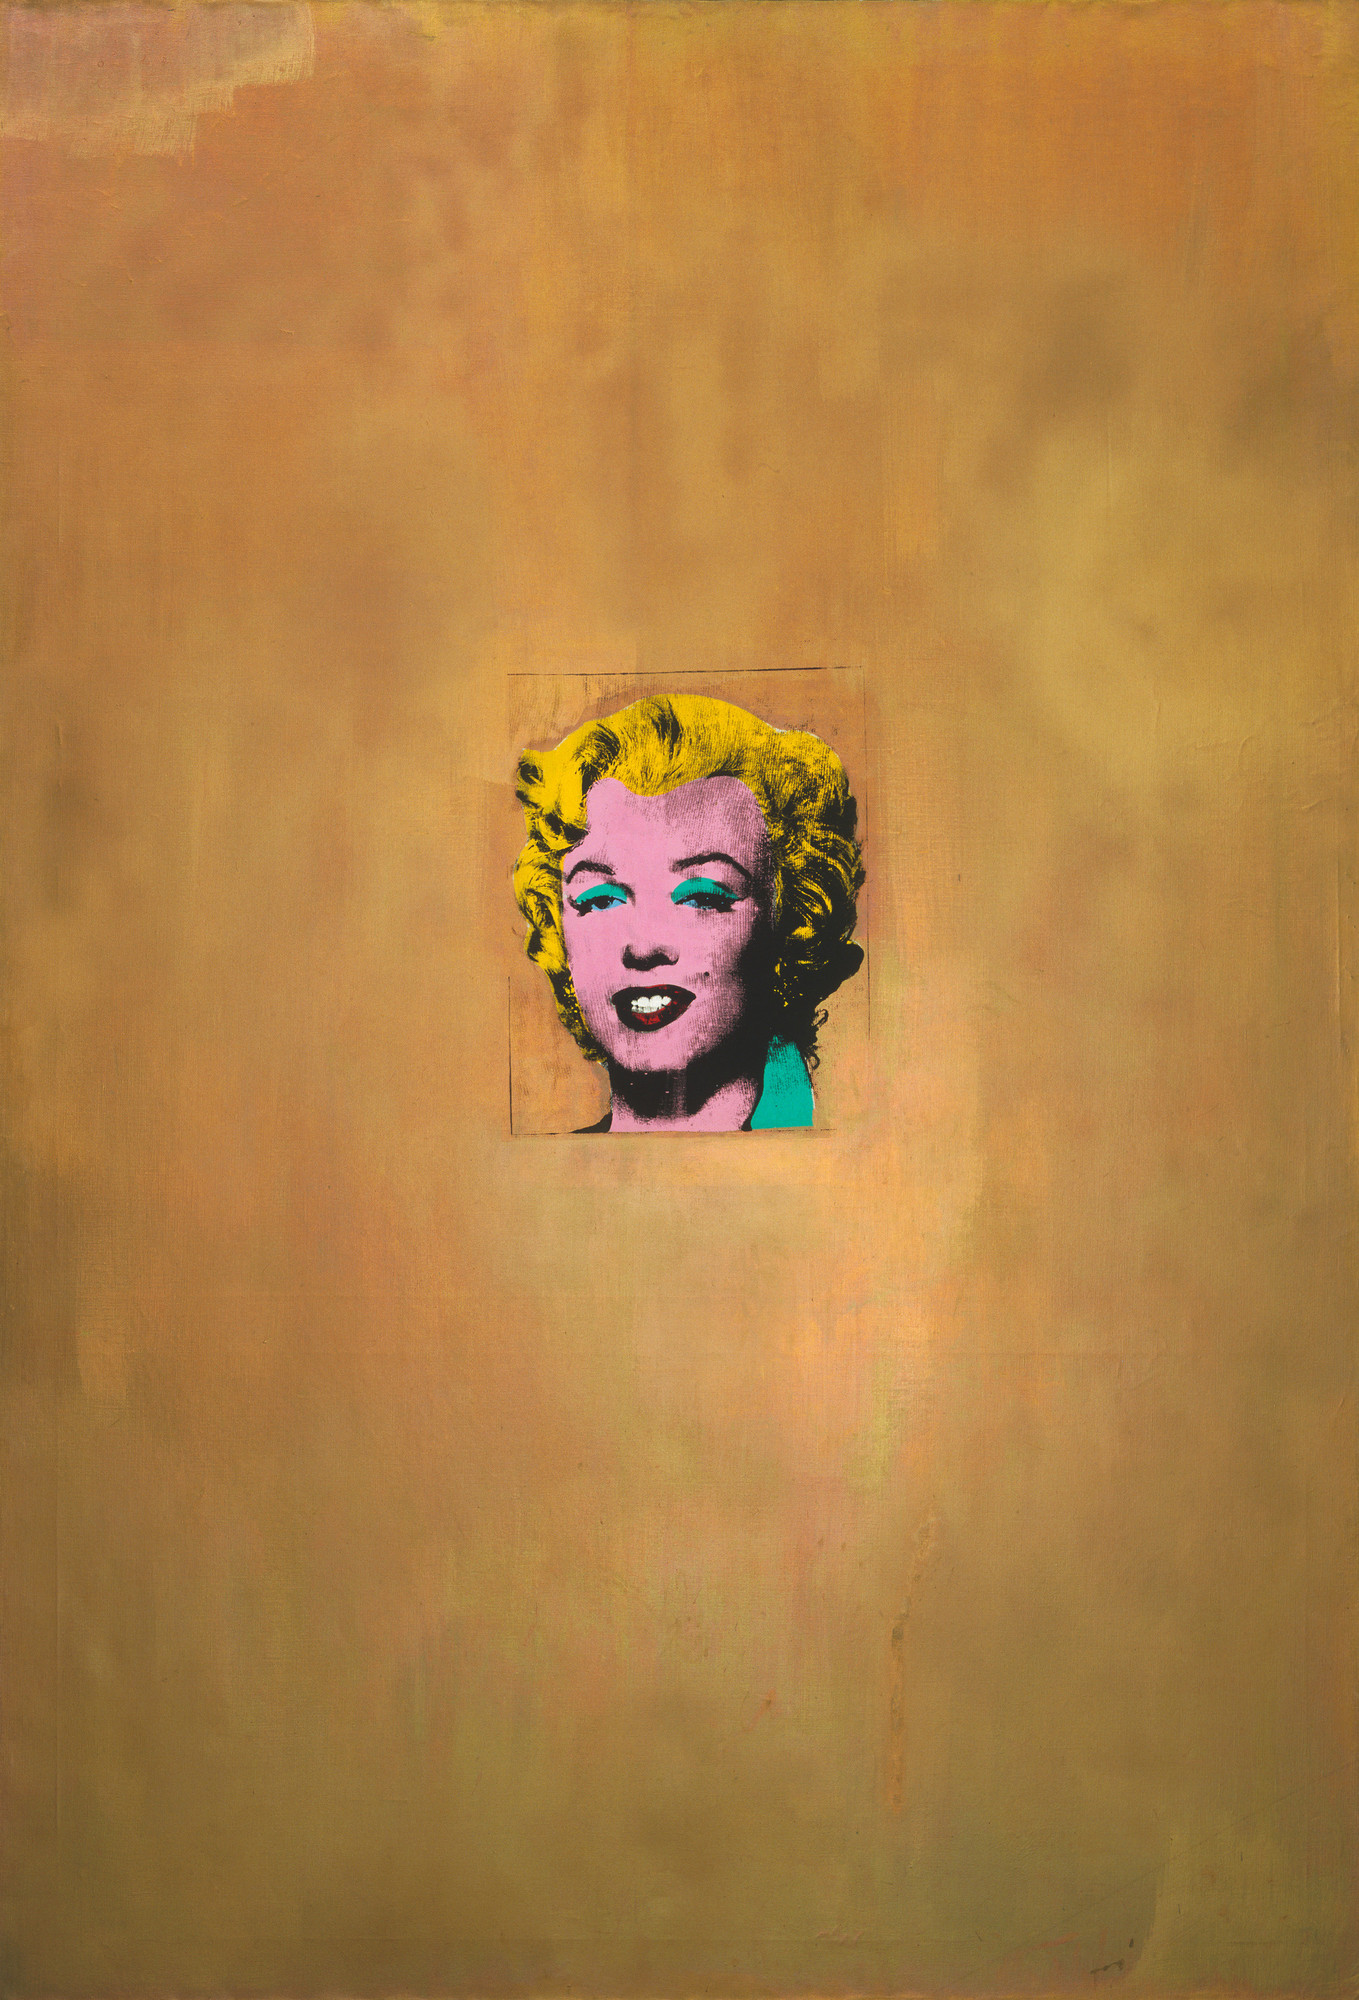 Andy Warhol, Gold Marilyn Monroe, 1962, silkscreen on canvas, 211.4 x 144.7 cm (Museum of Modern Art, New York)